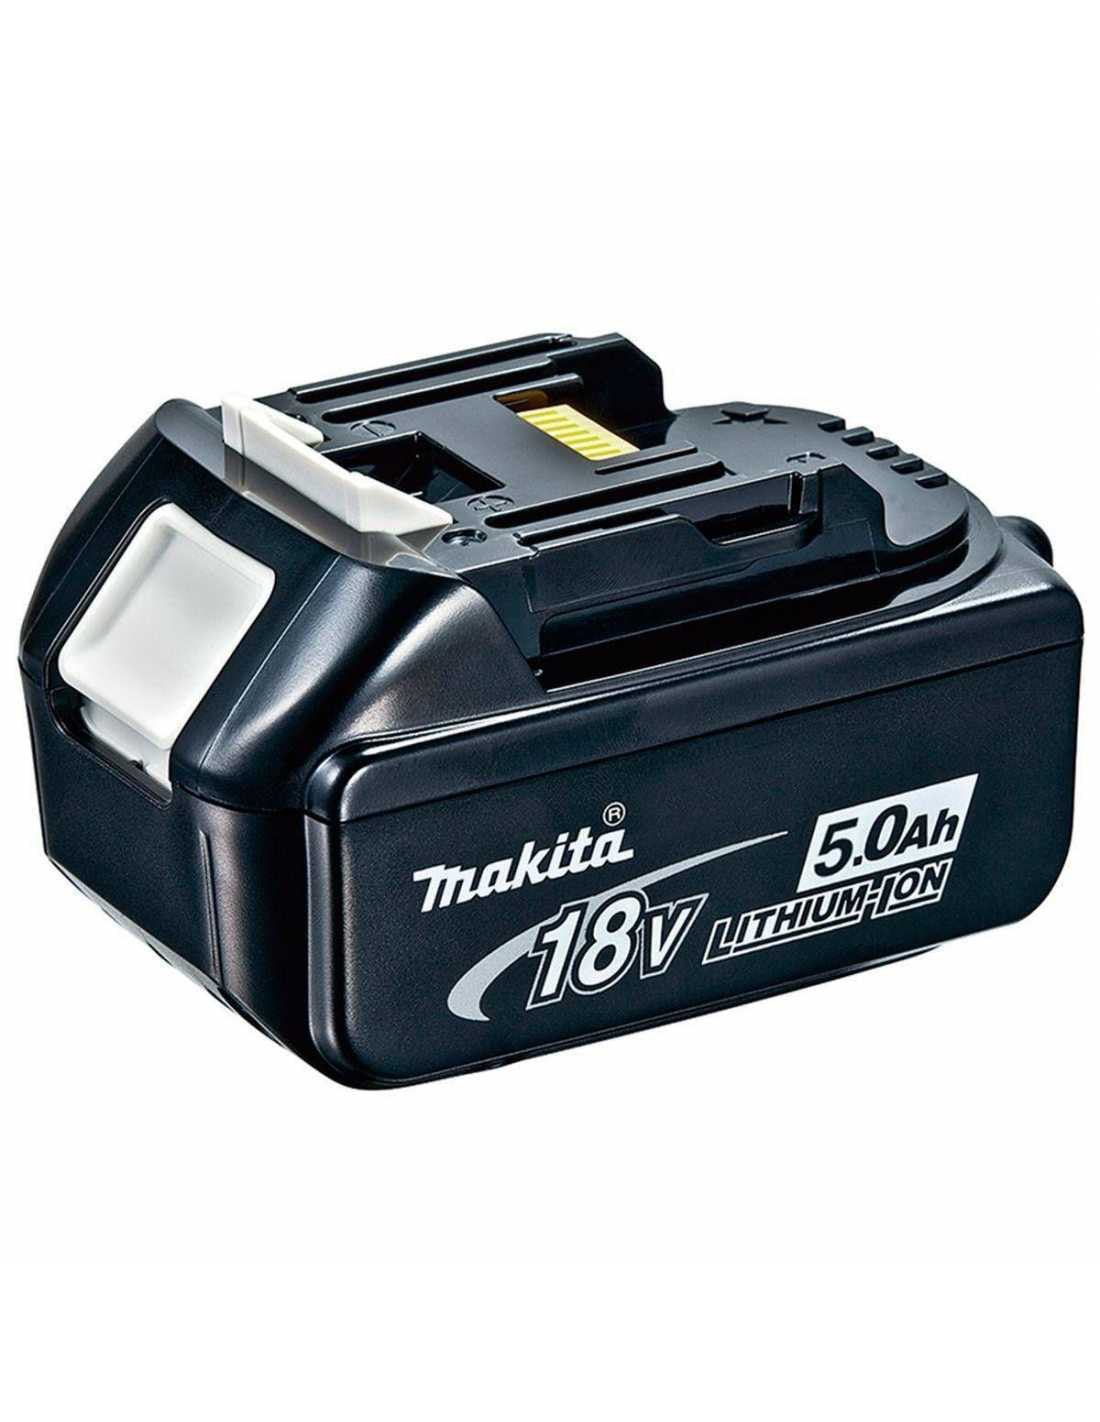 Kit Makita 7 outils + 2bat 5Ah + chargeur + 2 sac LXT600 MAKITA - 23